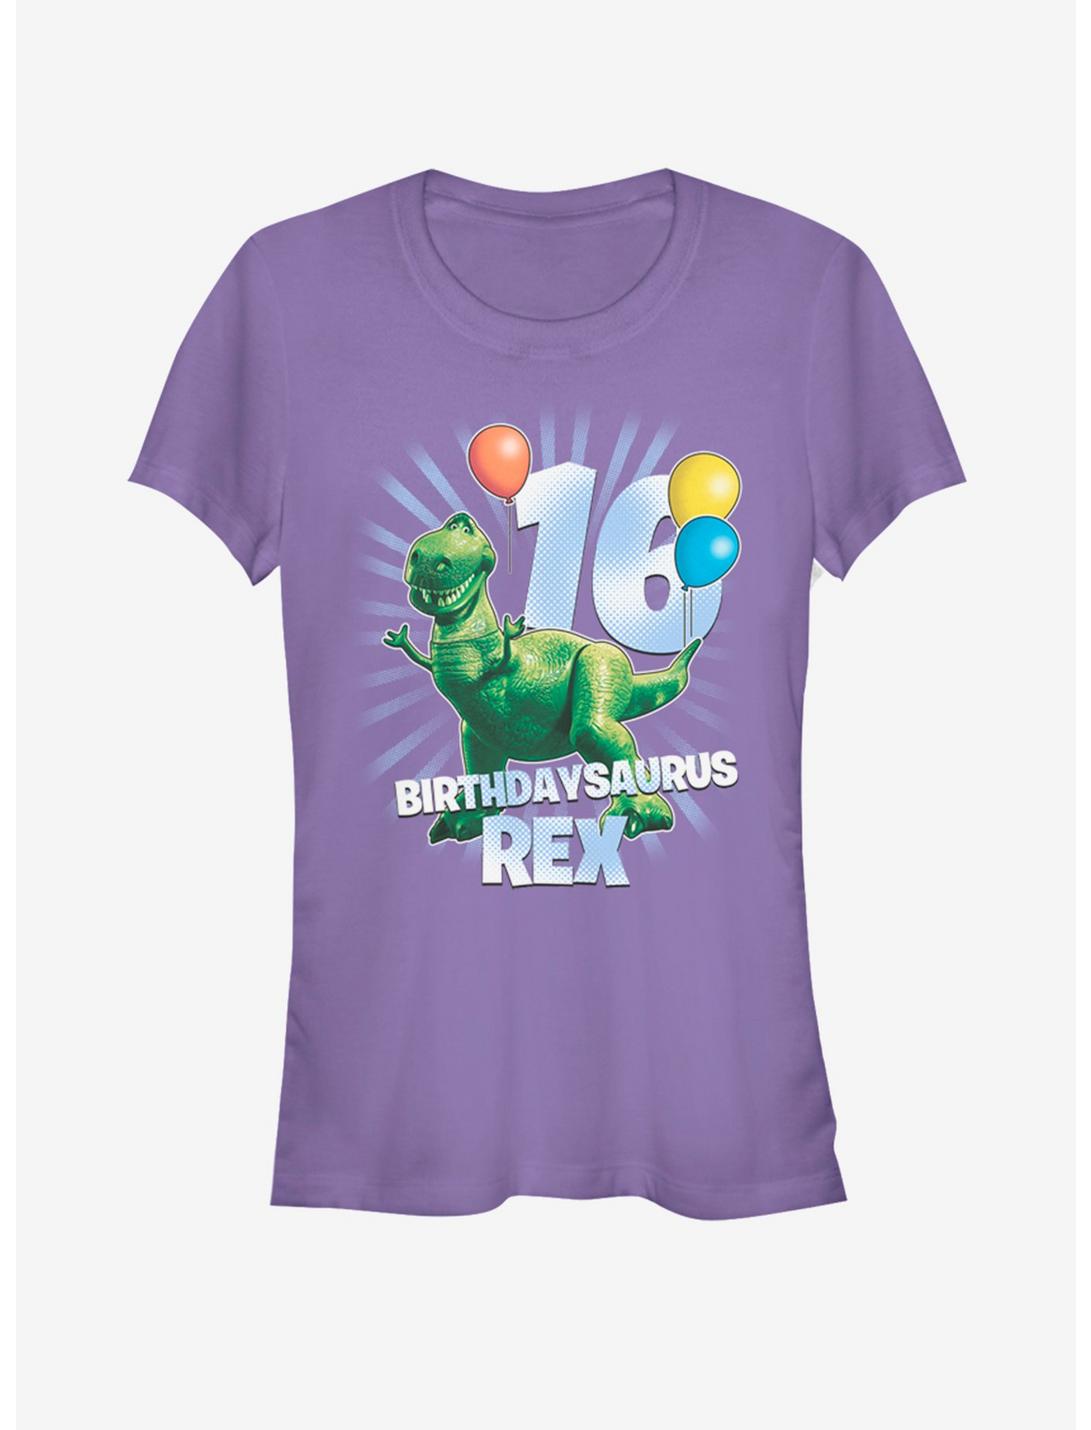 Disney Pixar Toy Story Ballon Rex 16 Girls T-Shirt, PURPLE, hi-res